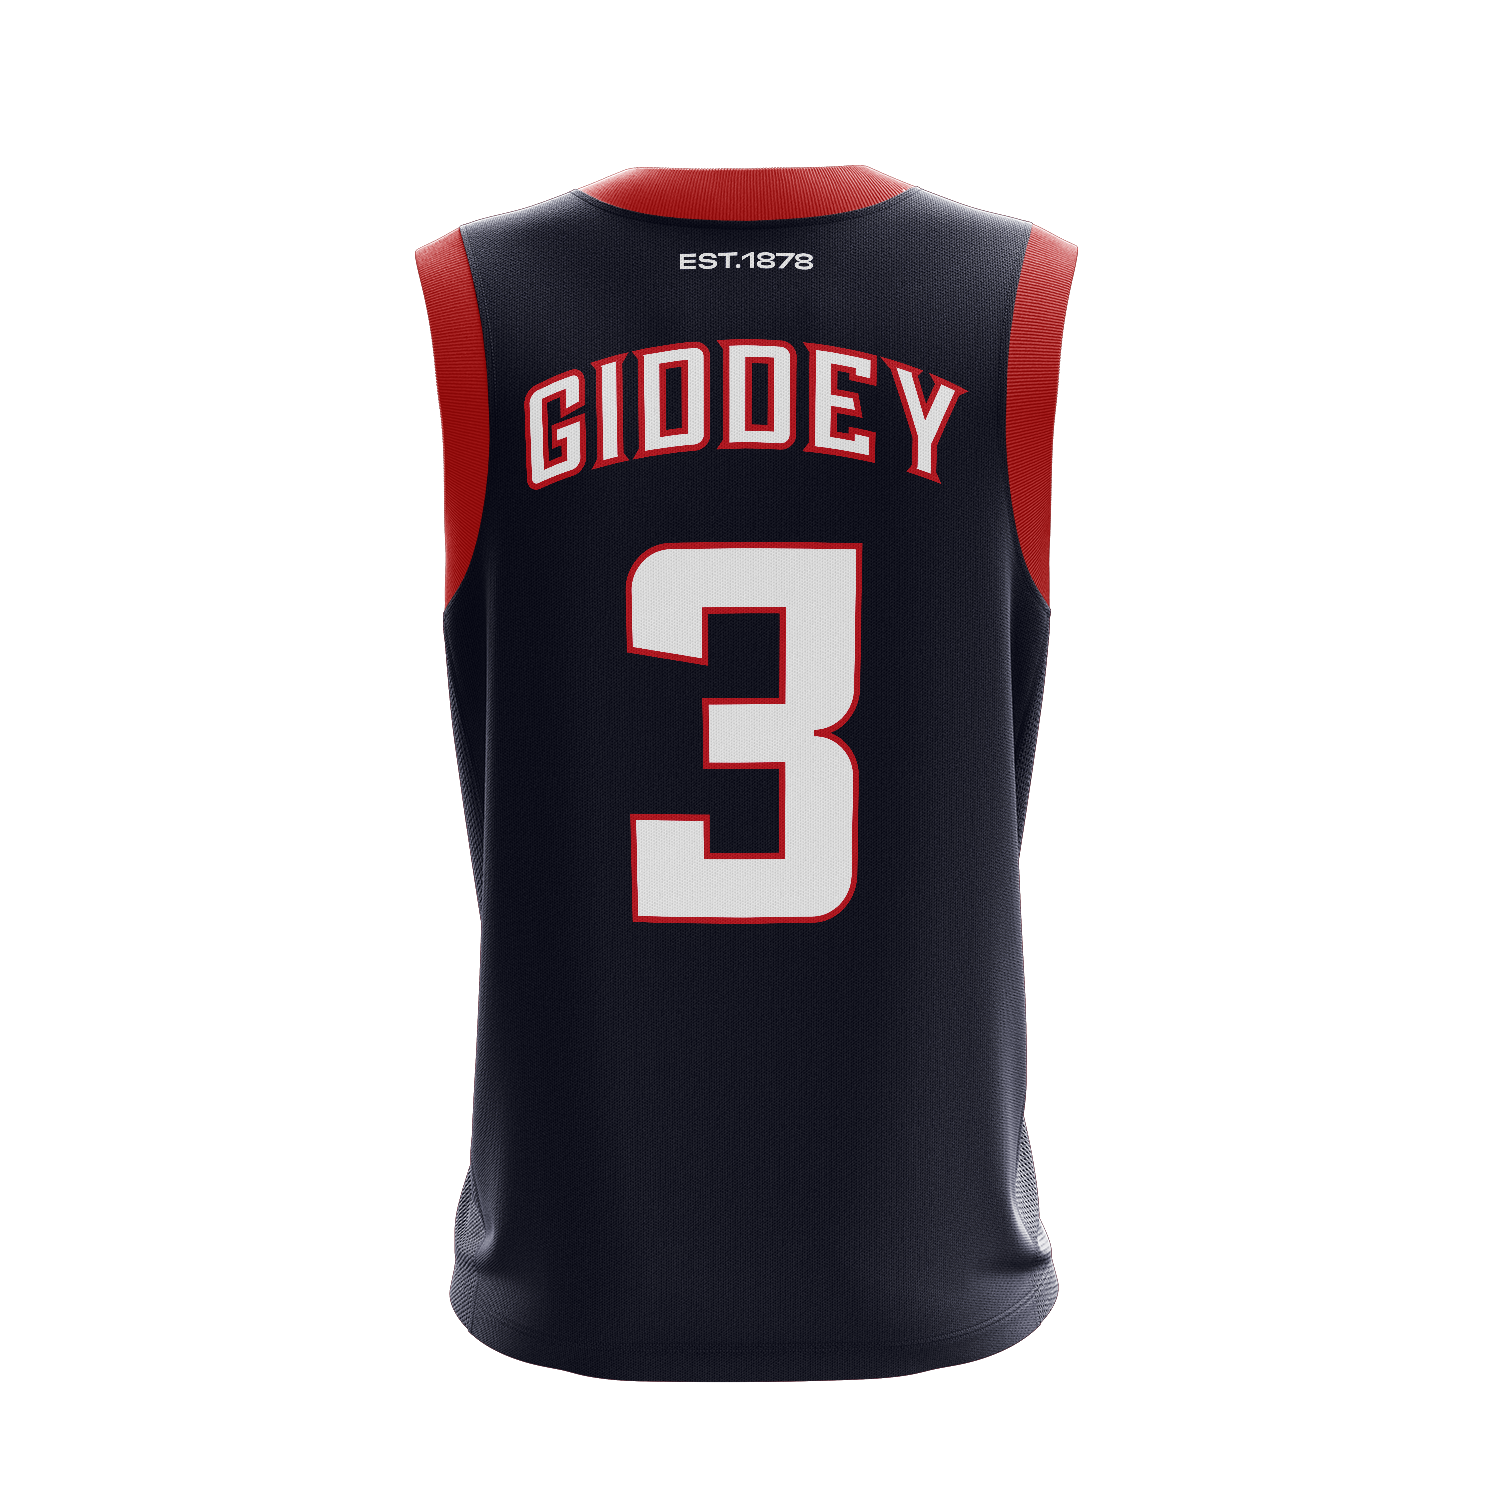 NBA Star Josh Giddey is coming to Norwood FC - Norwood Football Club